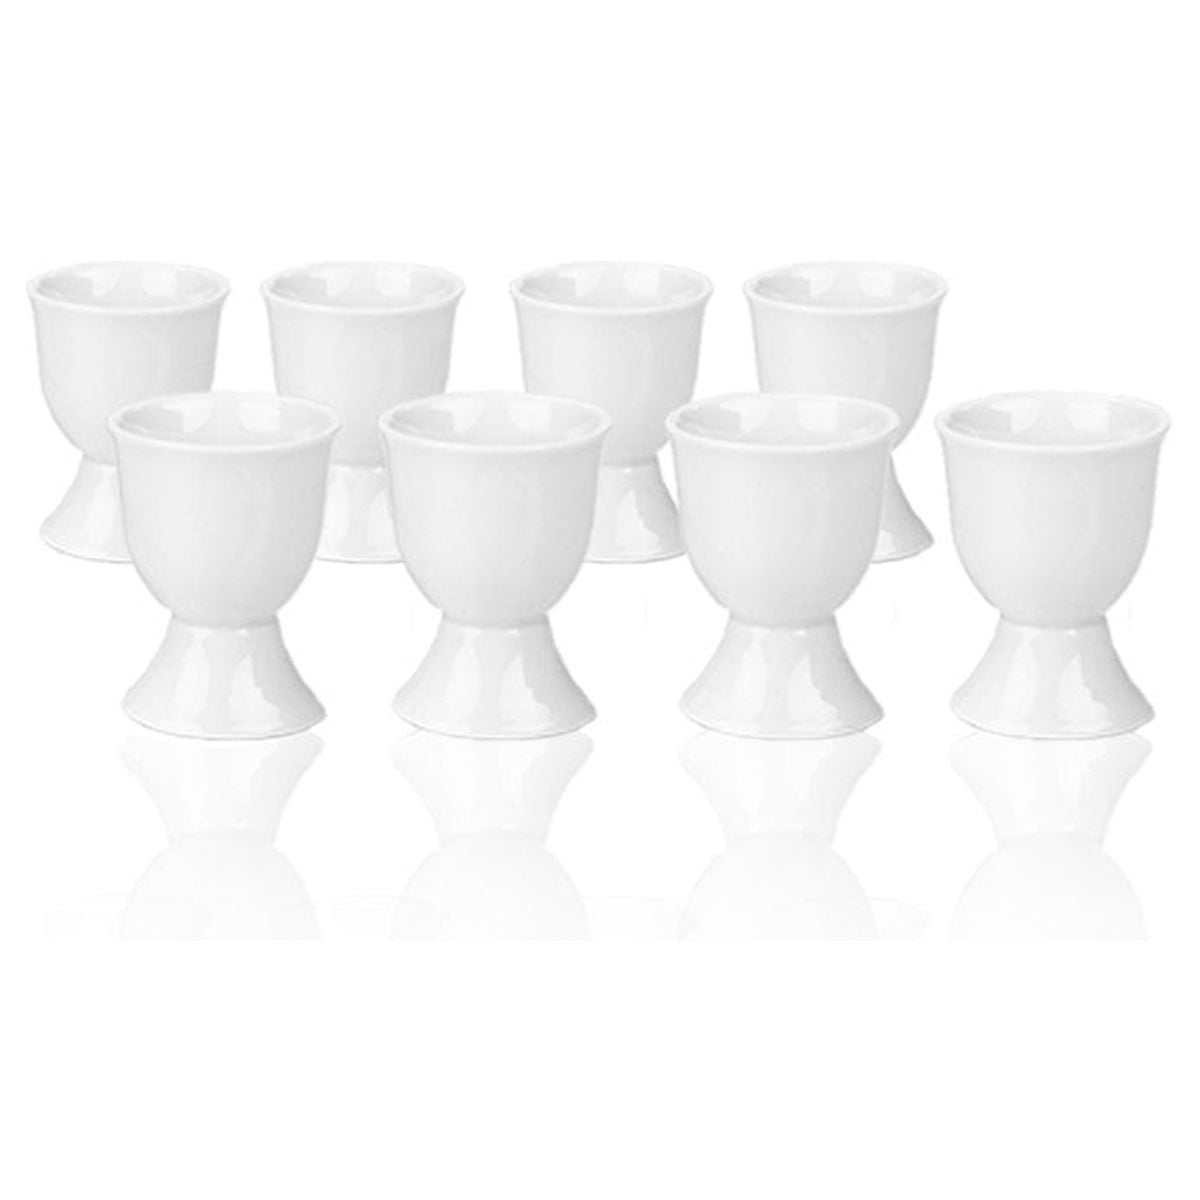 BIA Basic Breakfast Porcelain Egg Cup - Set of 4 (White)